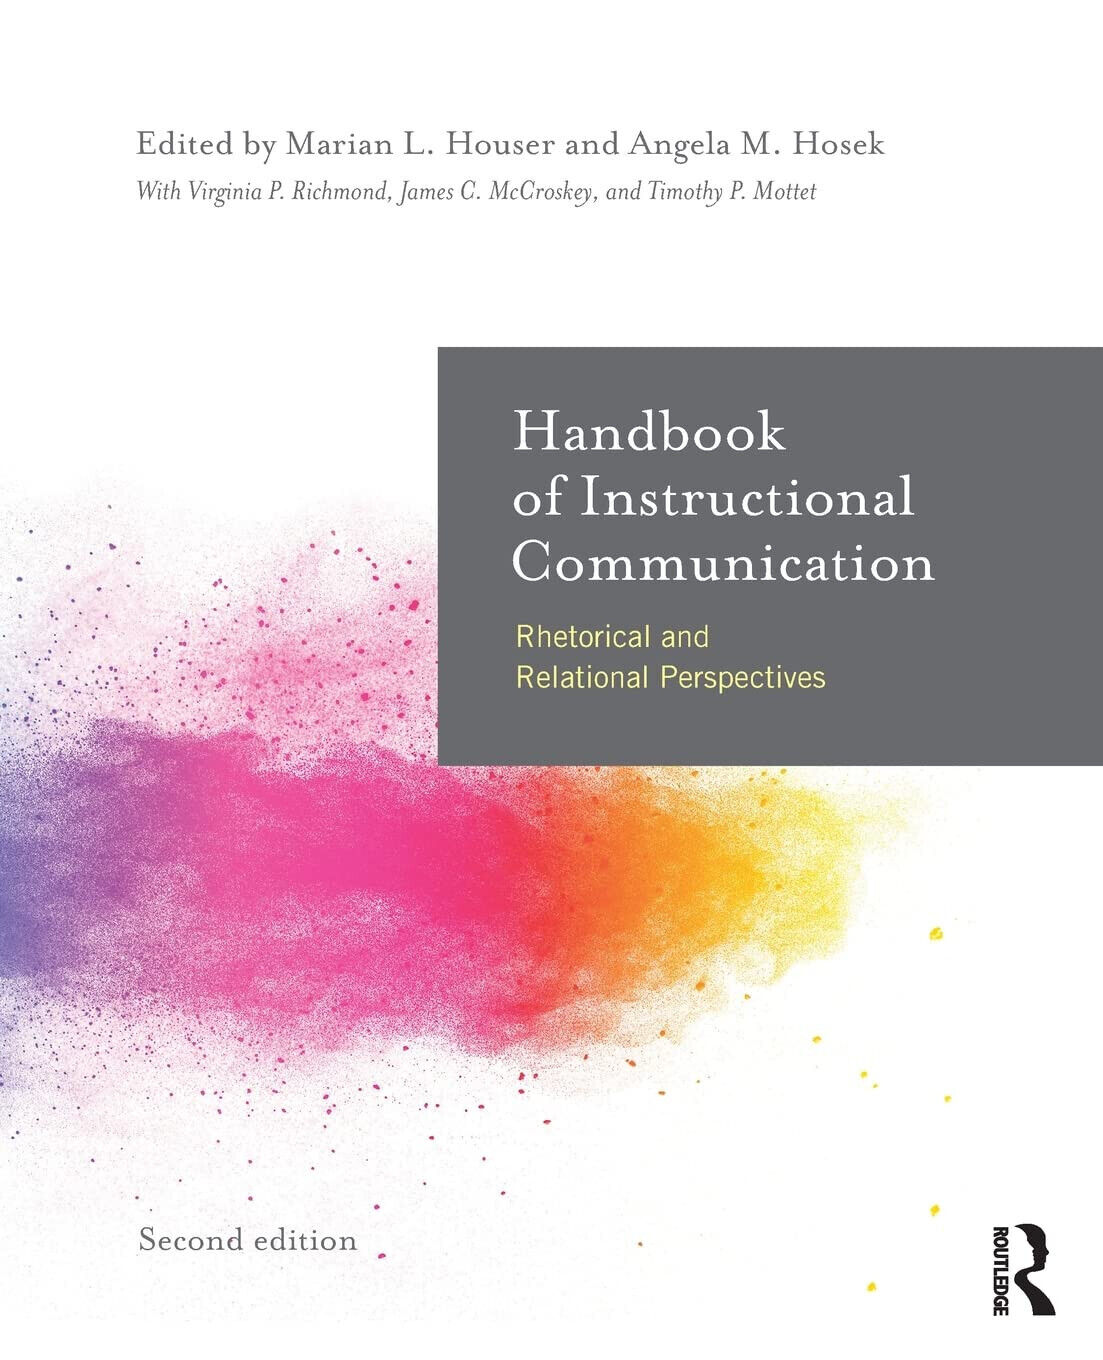 Handbook of Instructional Communication - Marian L Houser - Routledge, 2017 libro usato